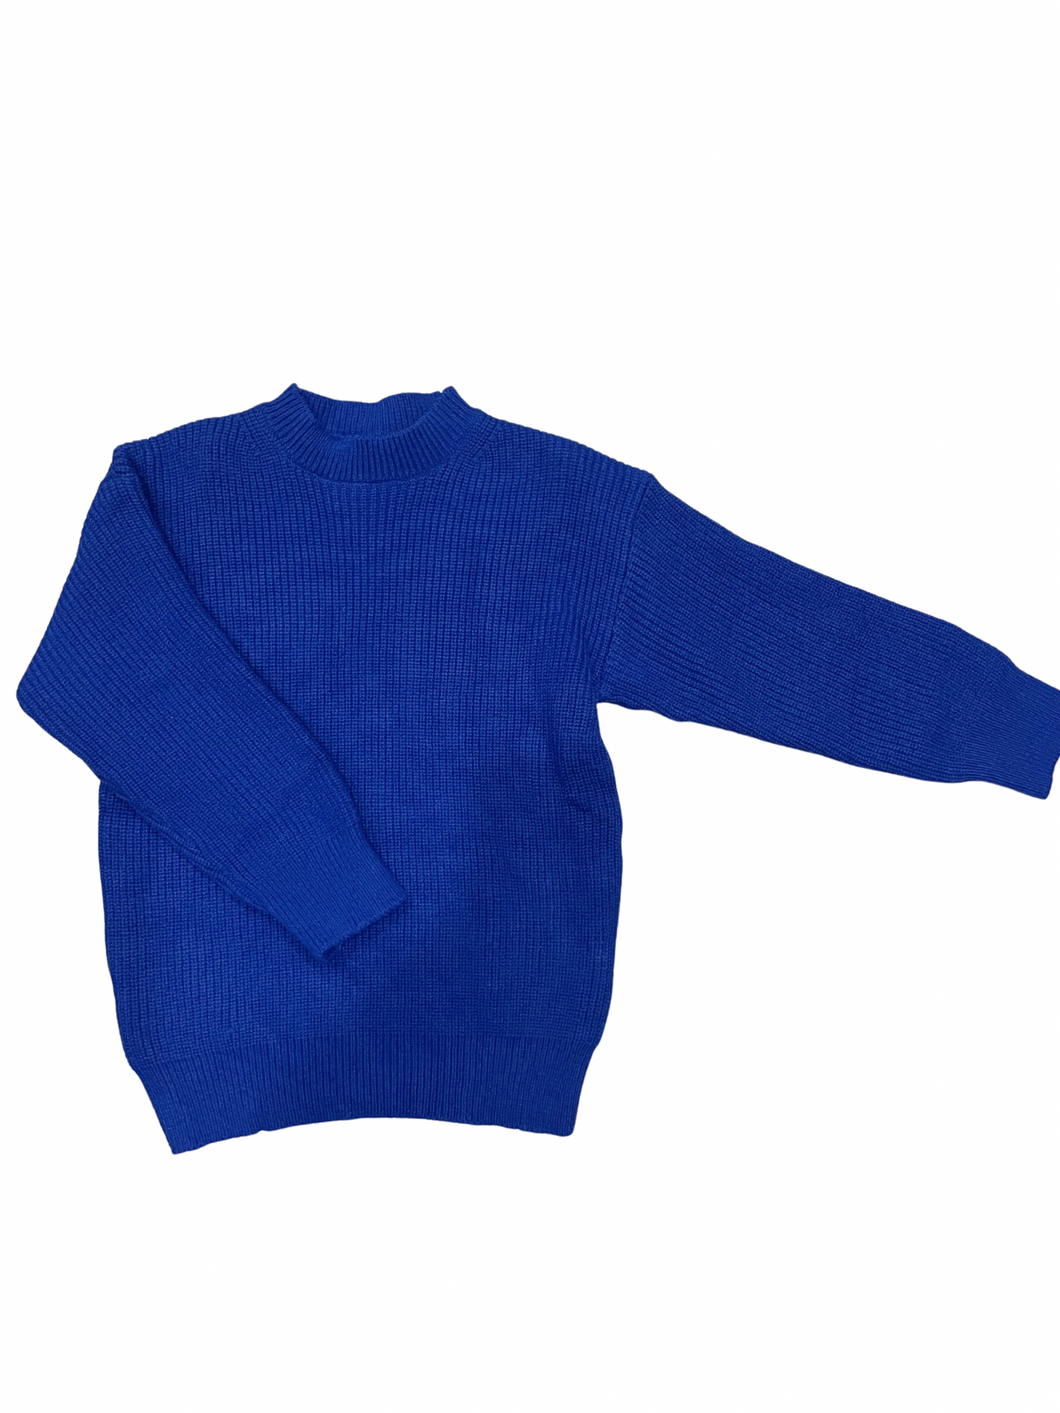 Blue Mock neck Sweater